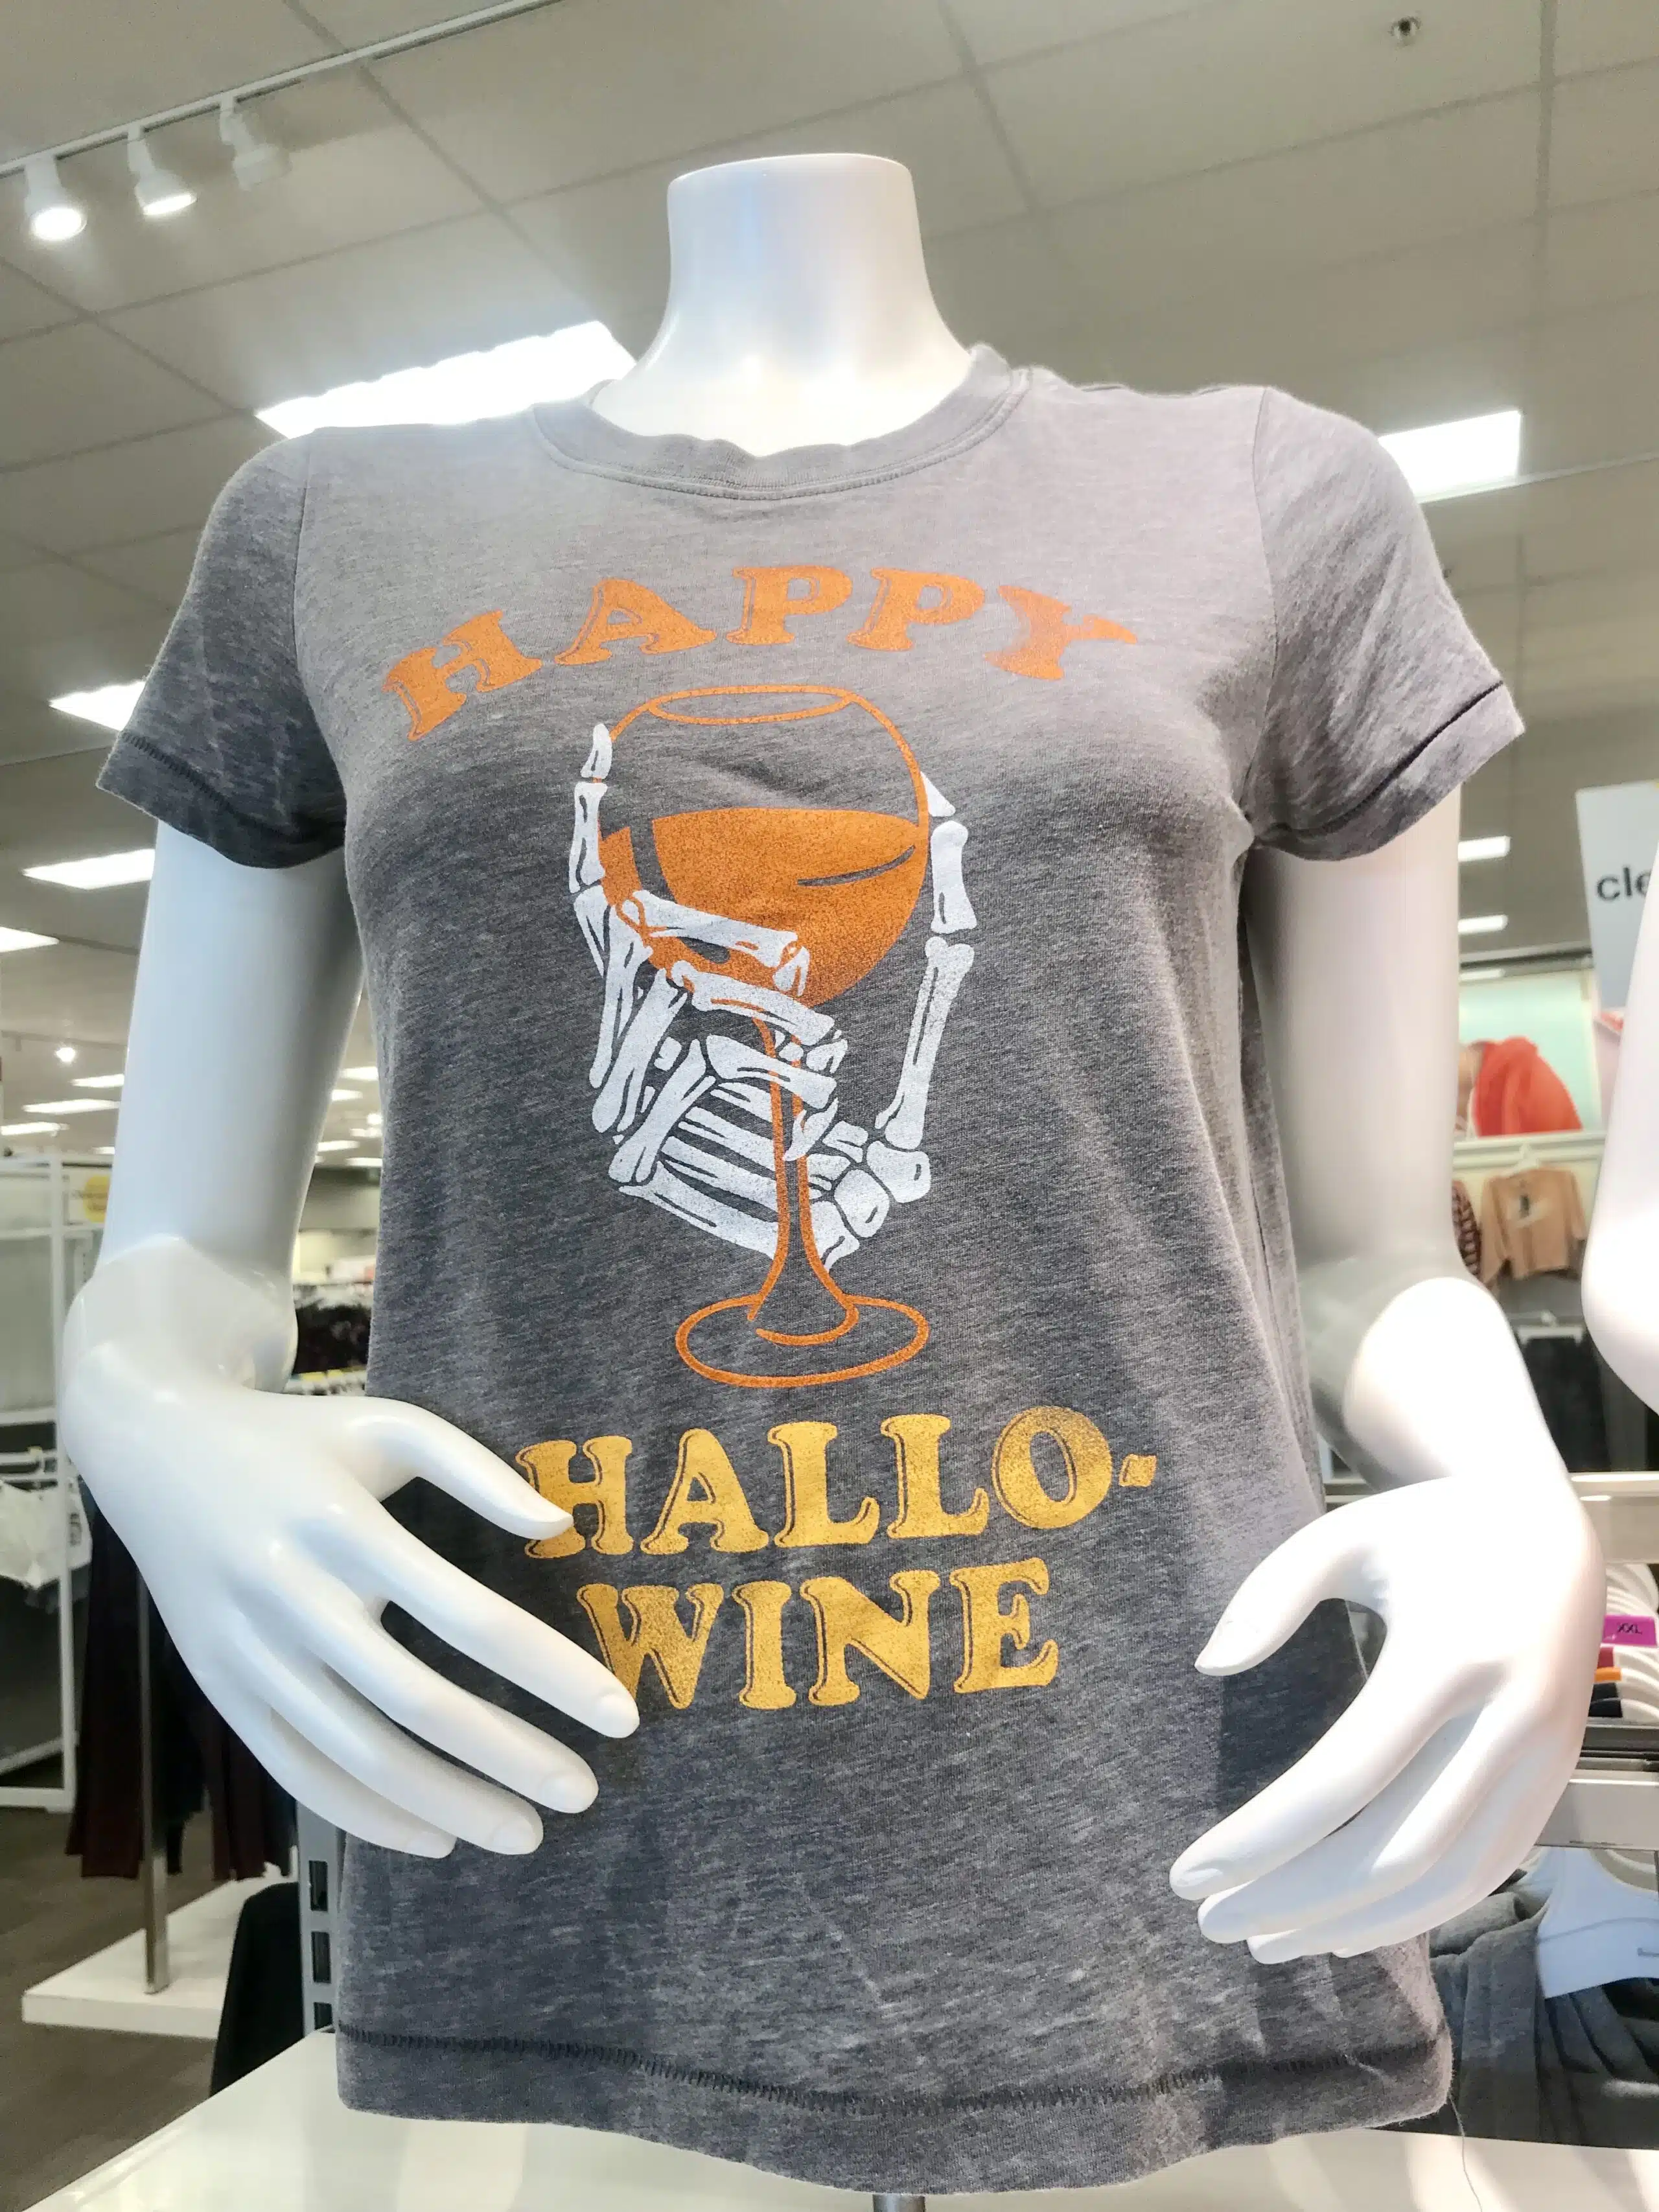 Happy Hallo-Wine t-shirt from Target